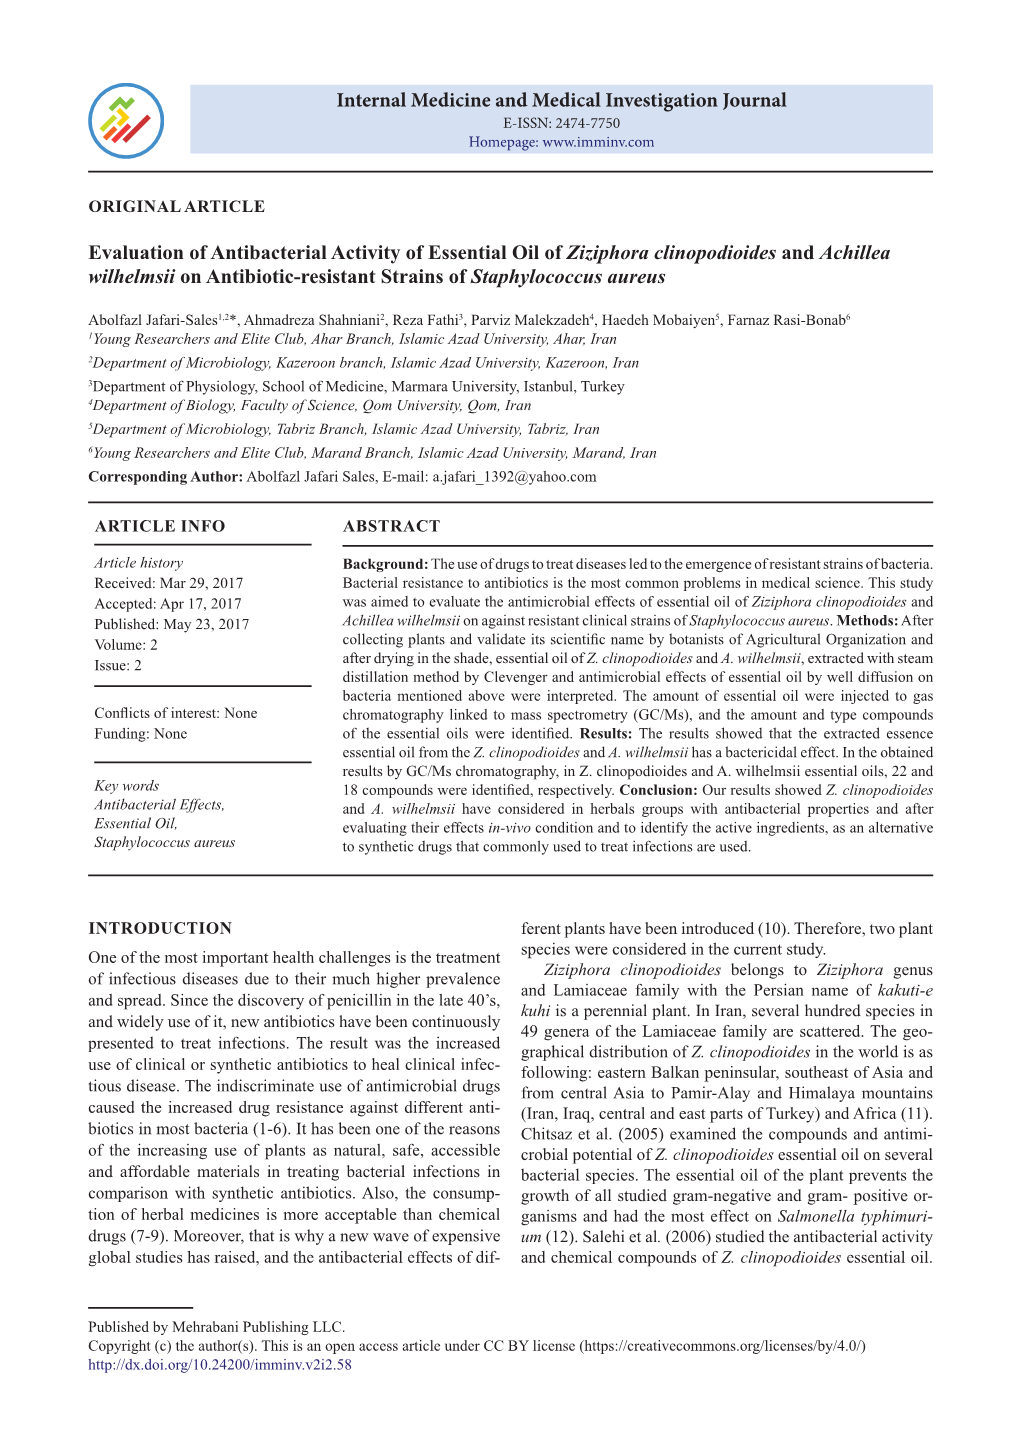 Evaluation of Antibacterial Activity of Essential Oil of Ziziphora Clinopodioides and Achillea Wilhelmsii on Antibiotic-Resistant Strains of Staphylococcus Aureus